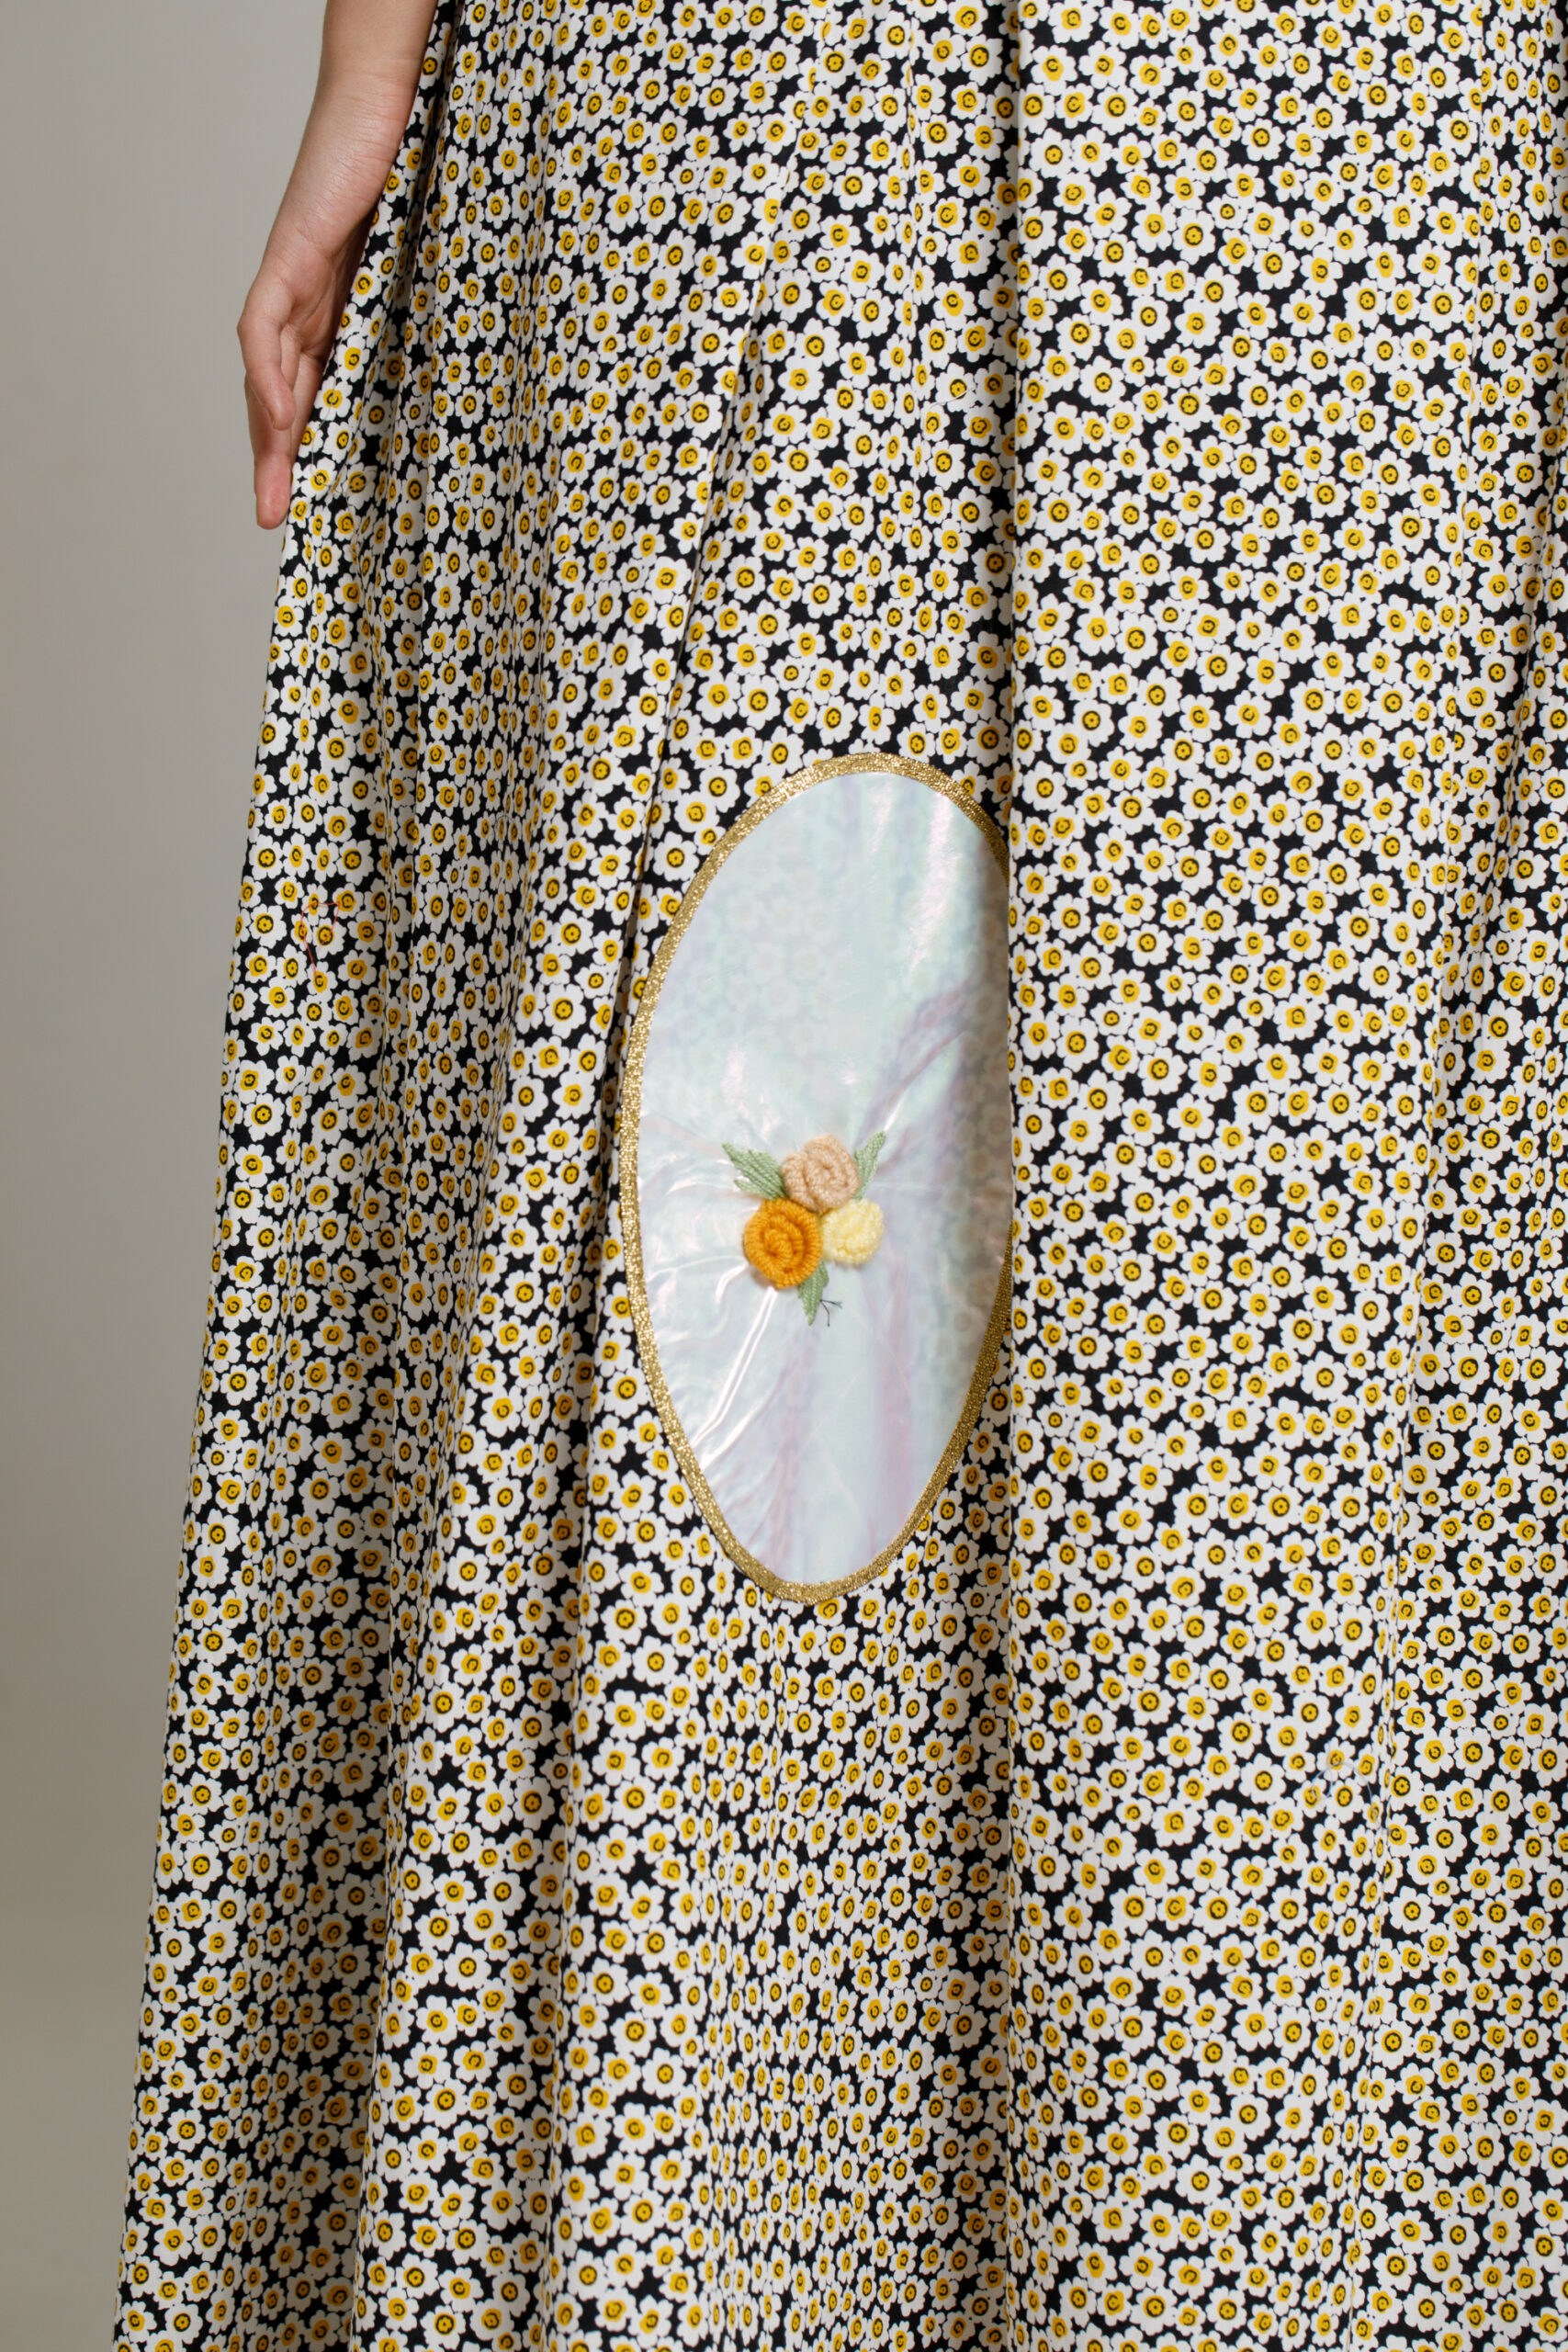 AMENA casual detachable skirt with short pants. Natural fabrics, original design, handmade embroidery